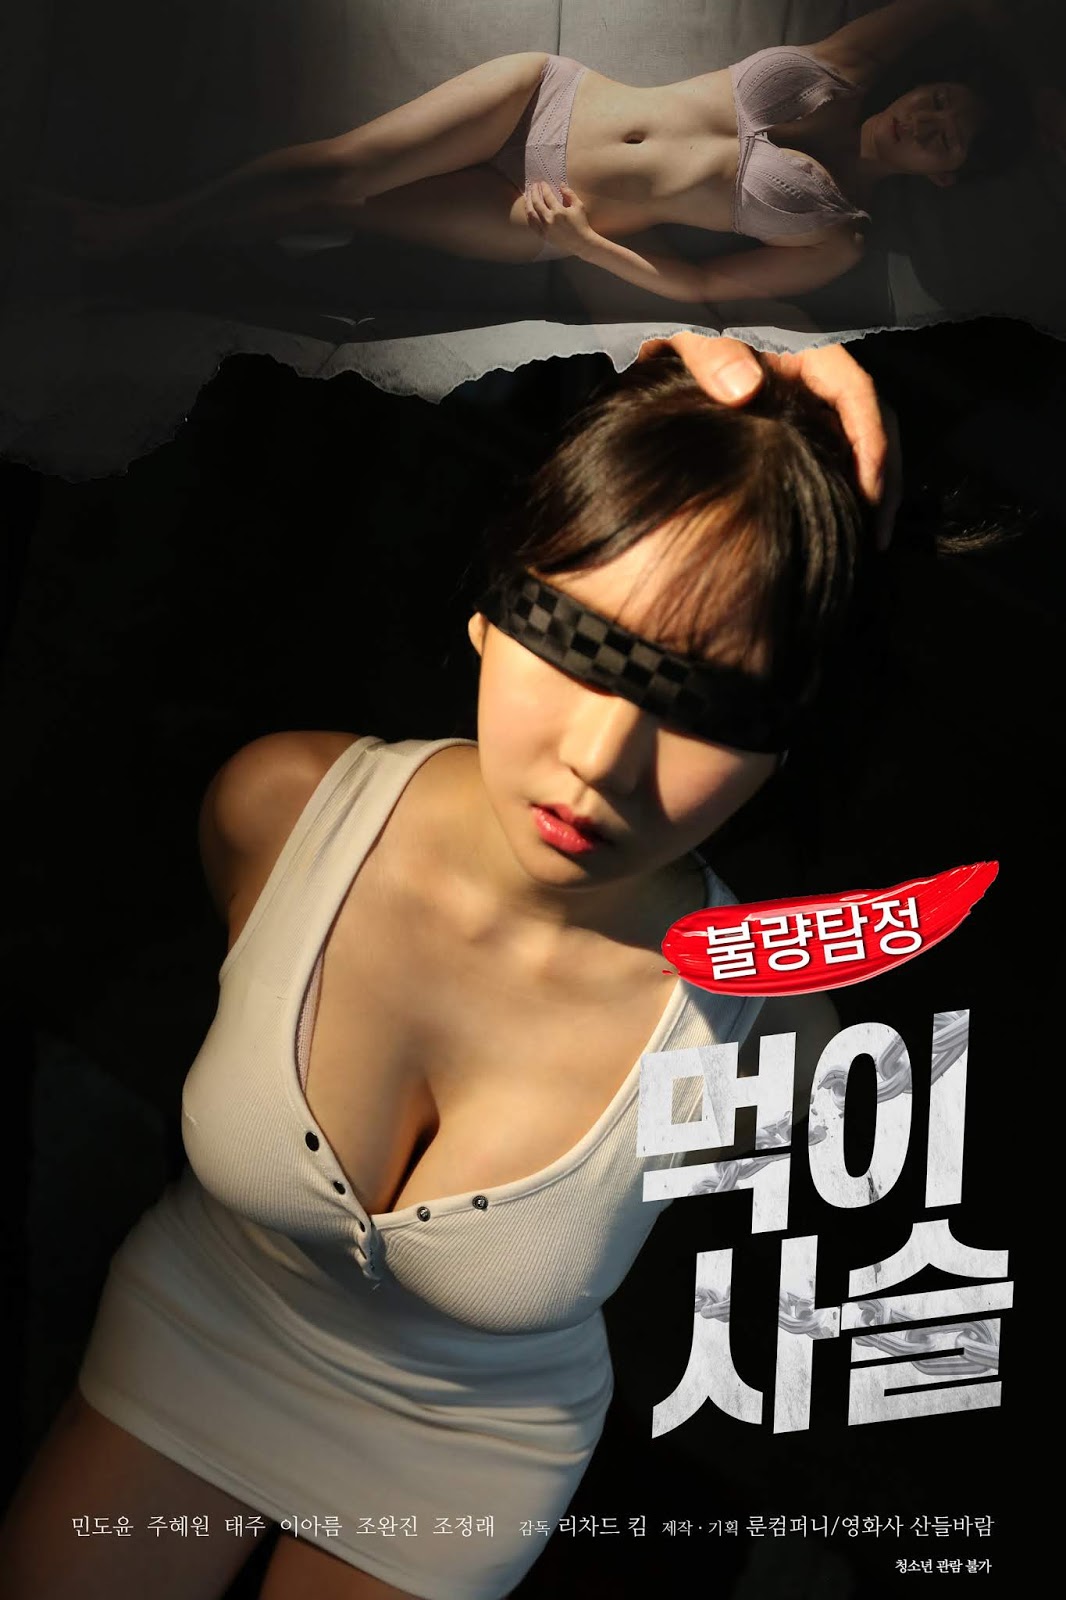 Bad Detective: Food Chain Full Korea 18+ Adult Movie Online Free